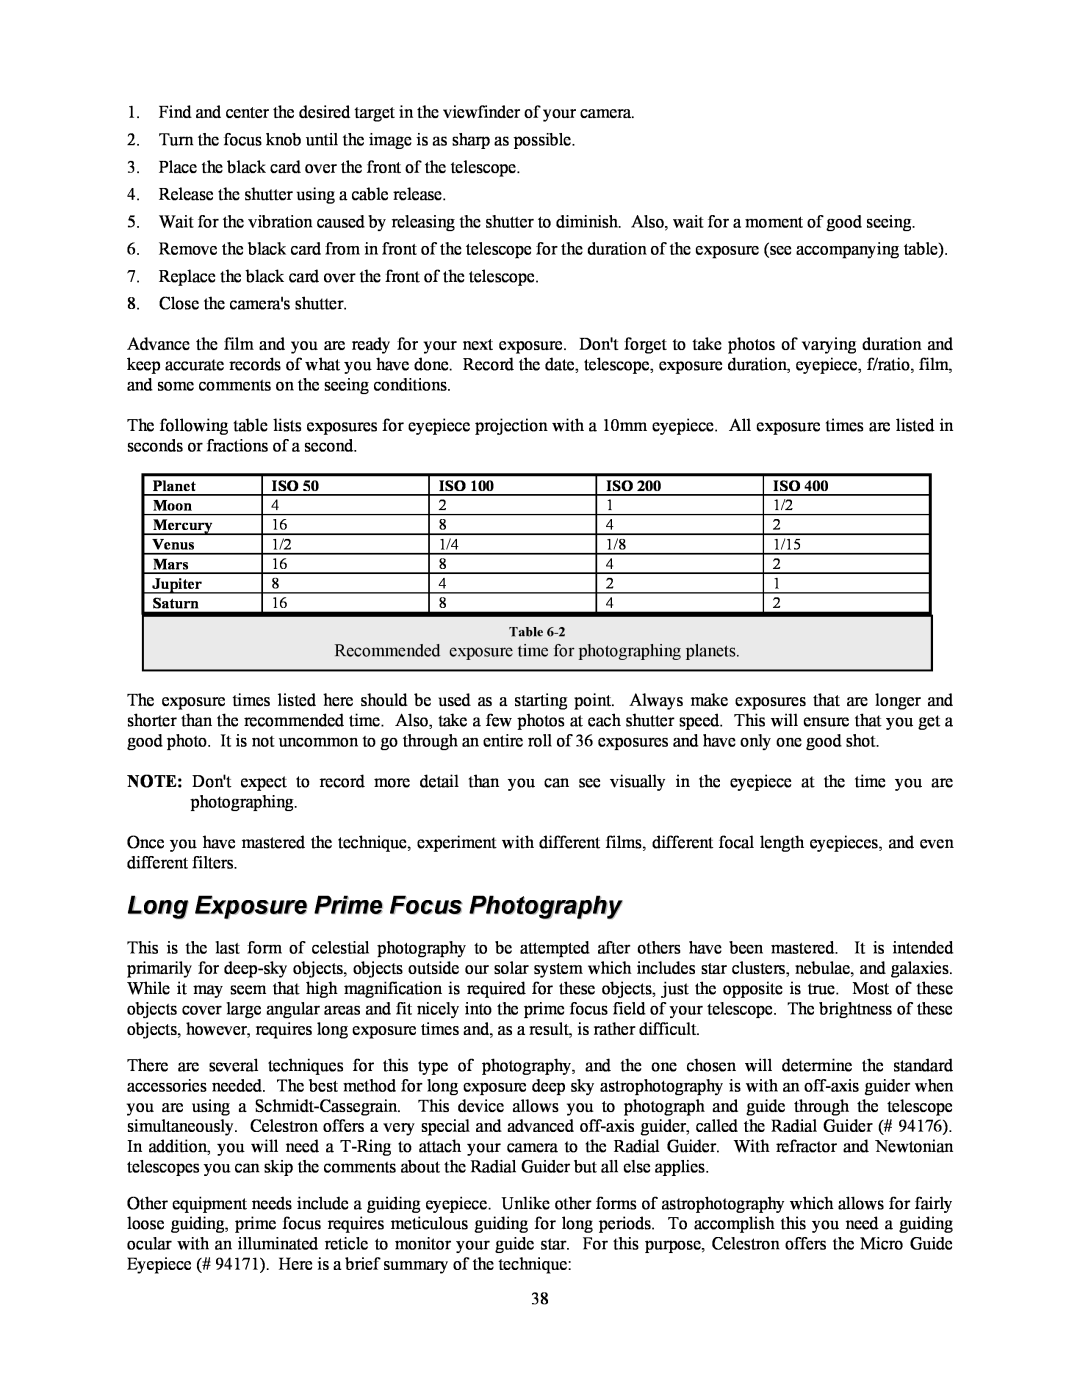 Celestron OMNI XLT 102 manual Long Exposure Prime Focus Photography 